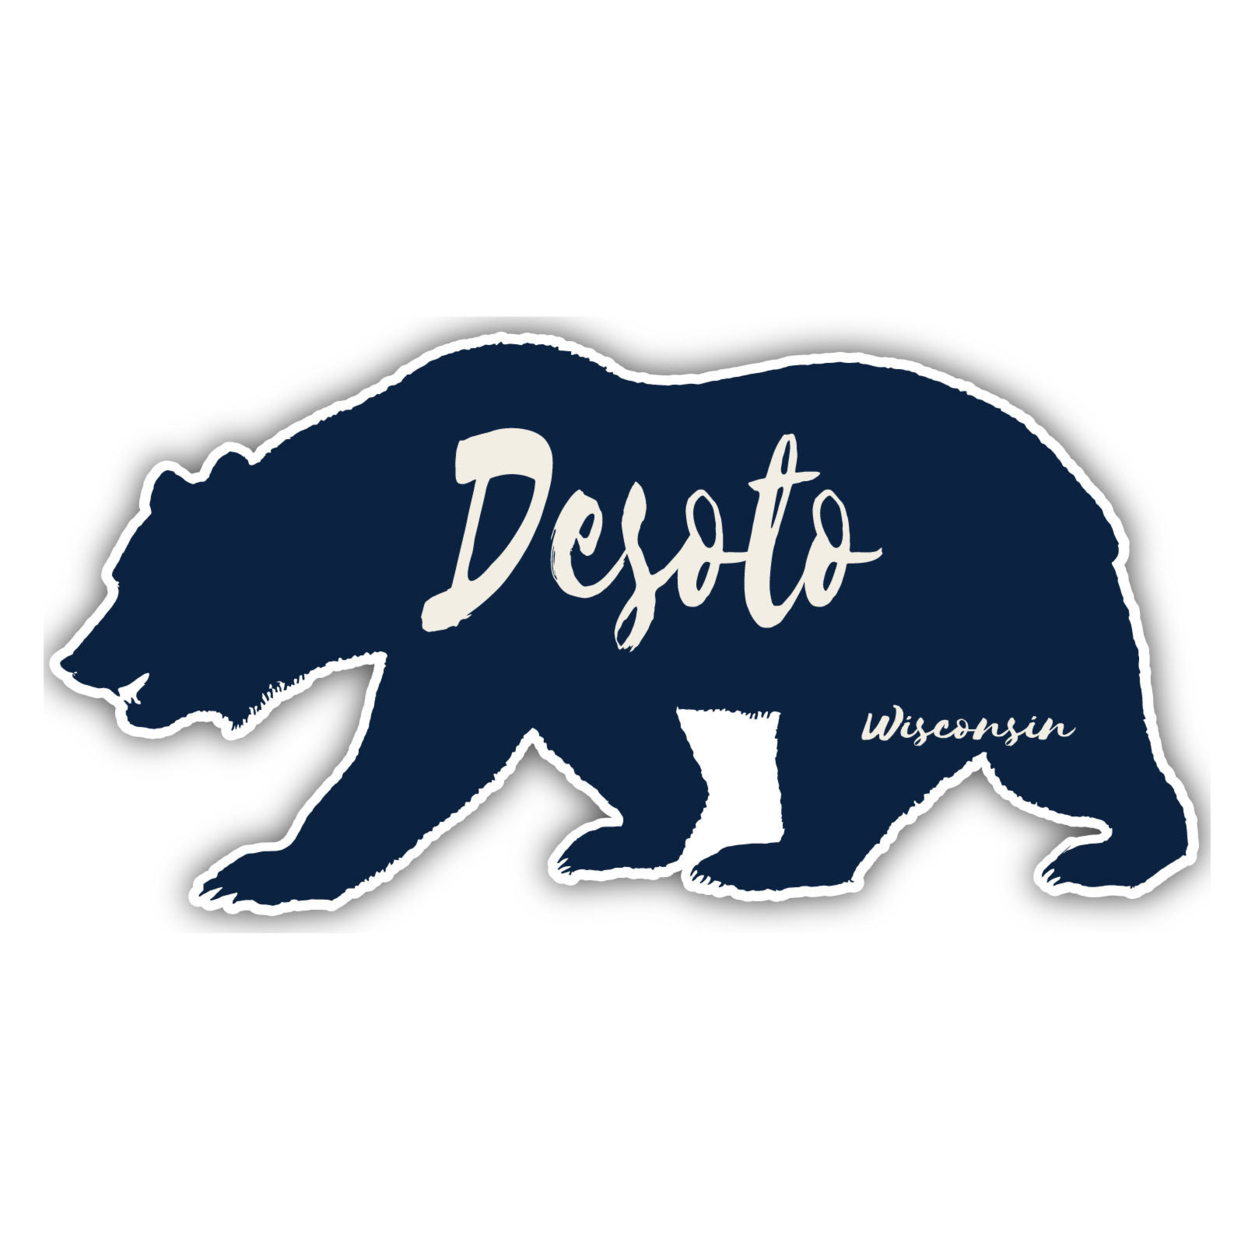 DeSoto Wisconsin Souvenir Decorative Stickers (Choose Theme And Size) - Single Unit, 2-Inch, Bear